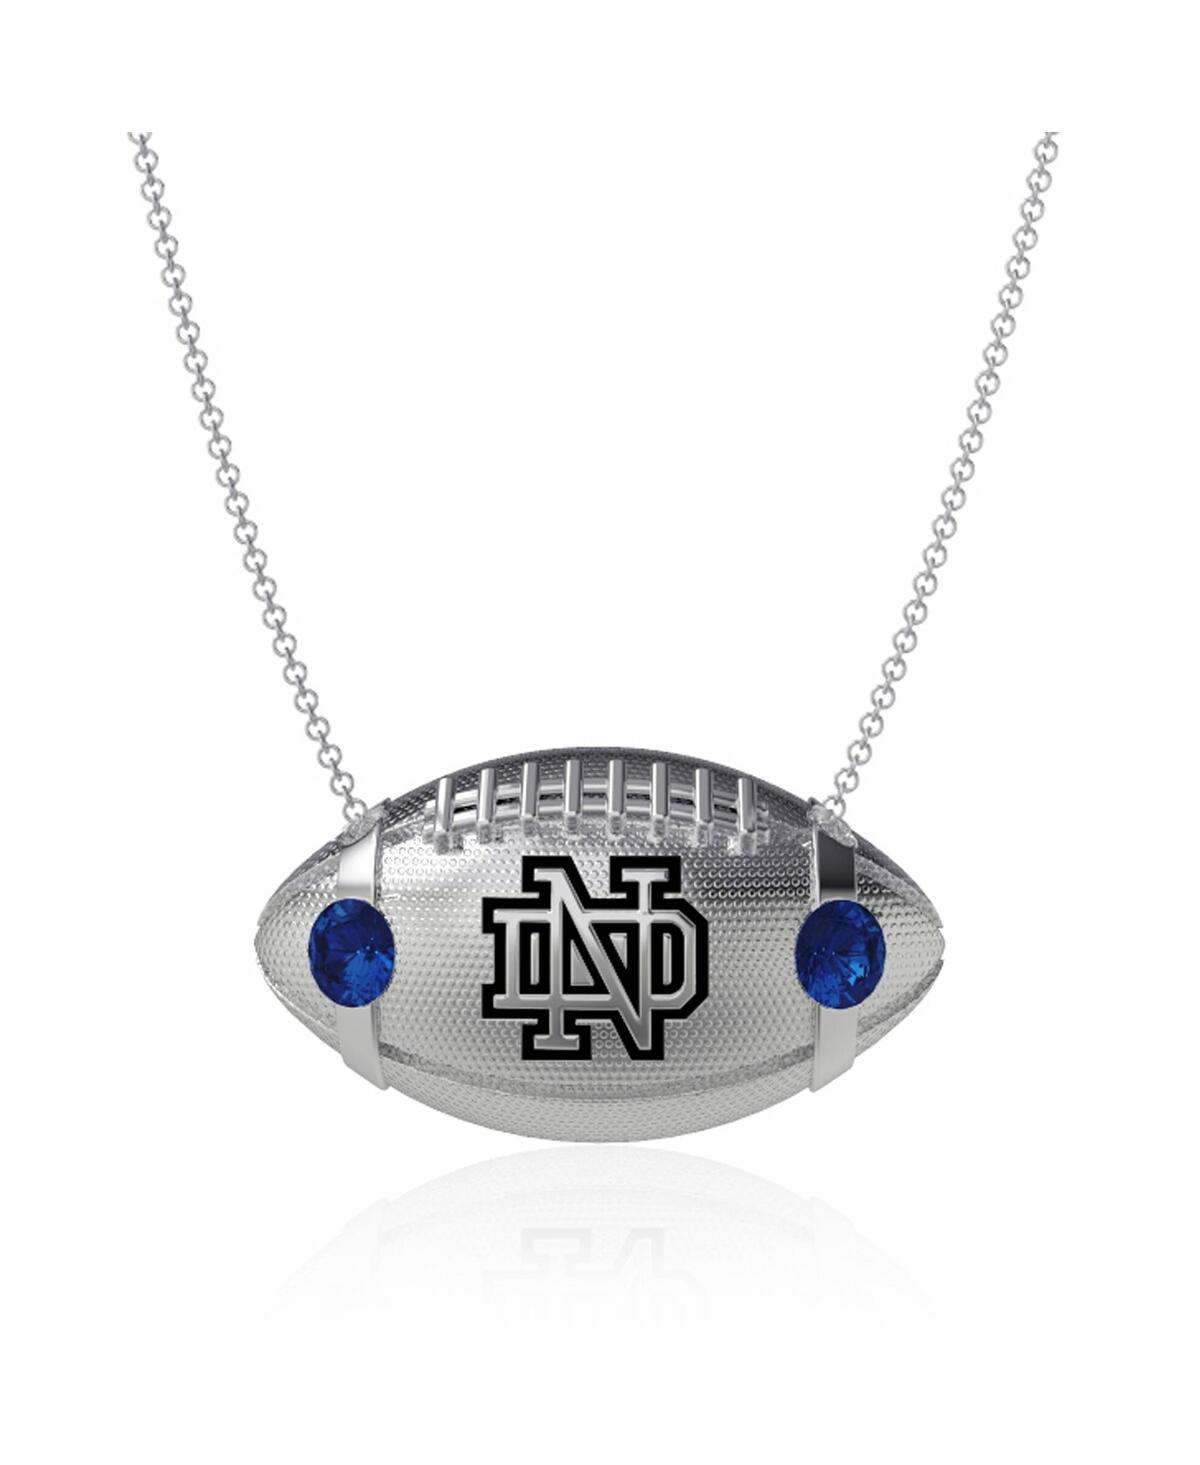 Women's Dayna Designs Notre Dame Fighting Irish Football Necklace - Silver, Blue